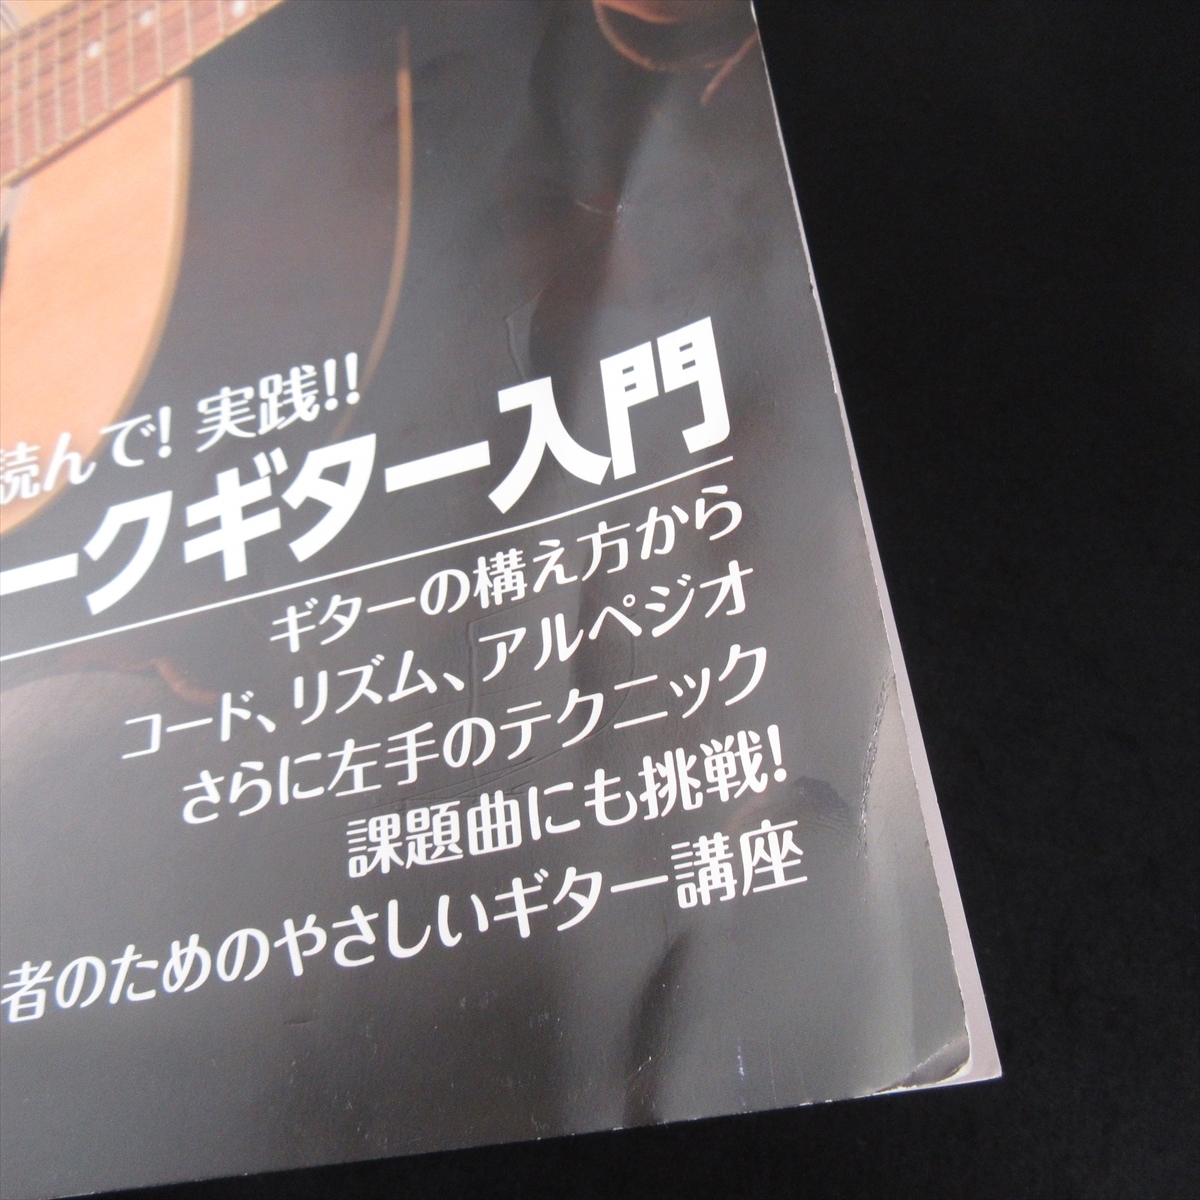 DVD(未開封) ＆ ギター教則本セット 『見て!読んで!実践! フォーク